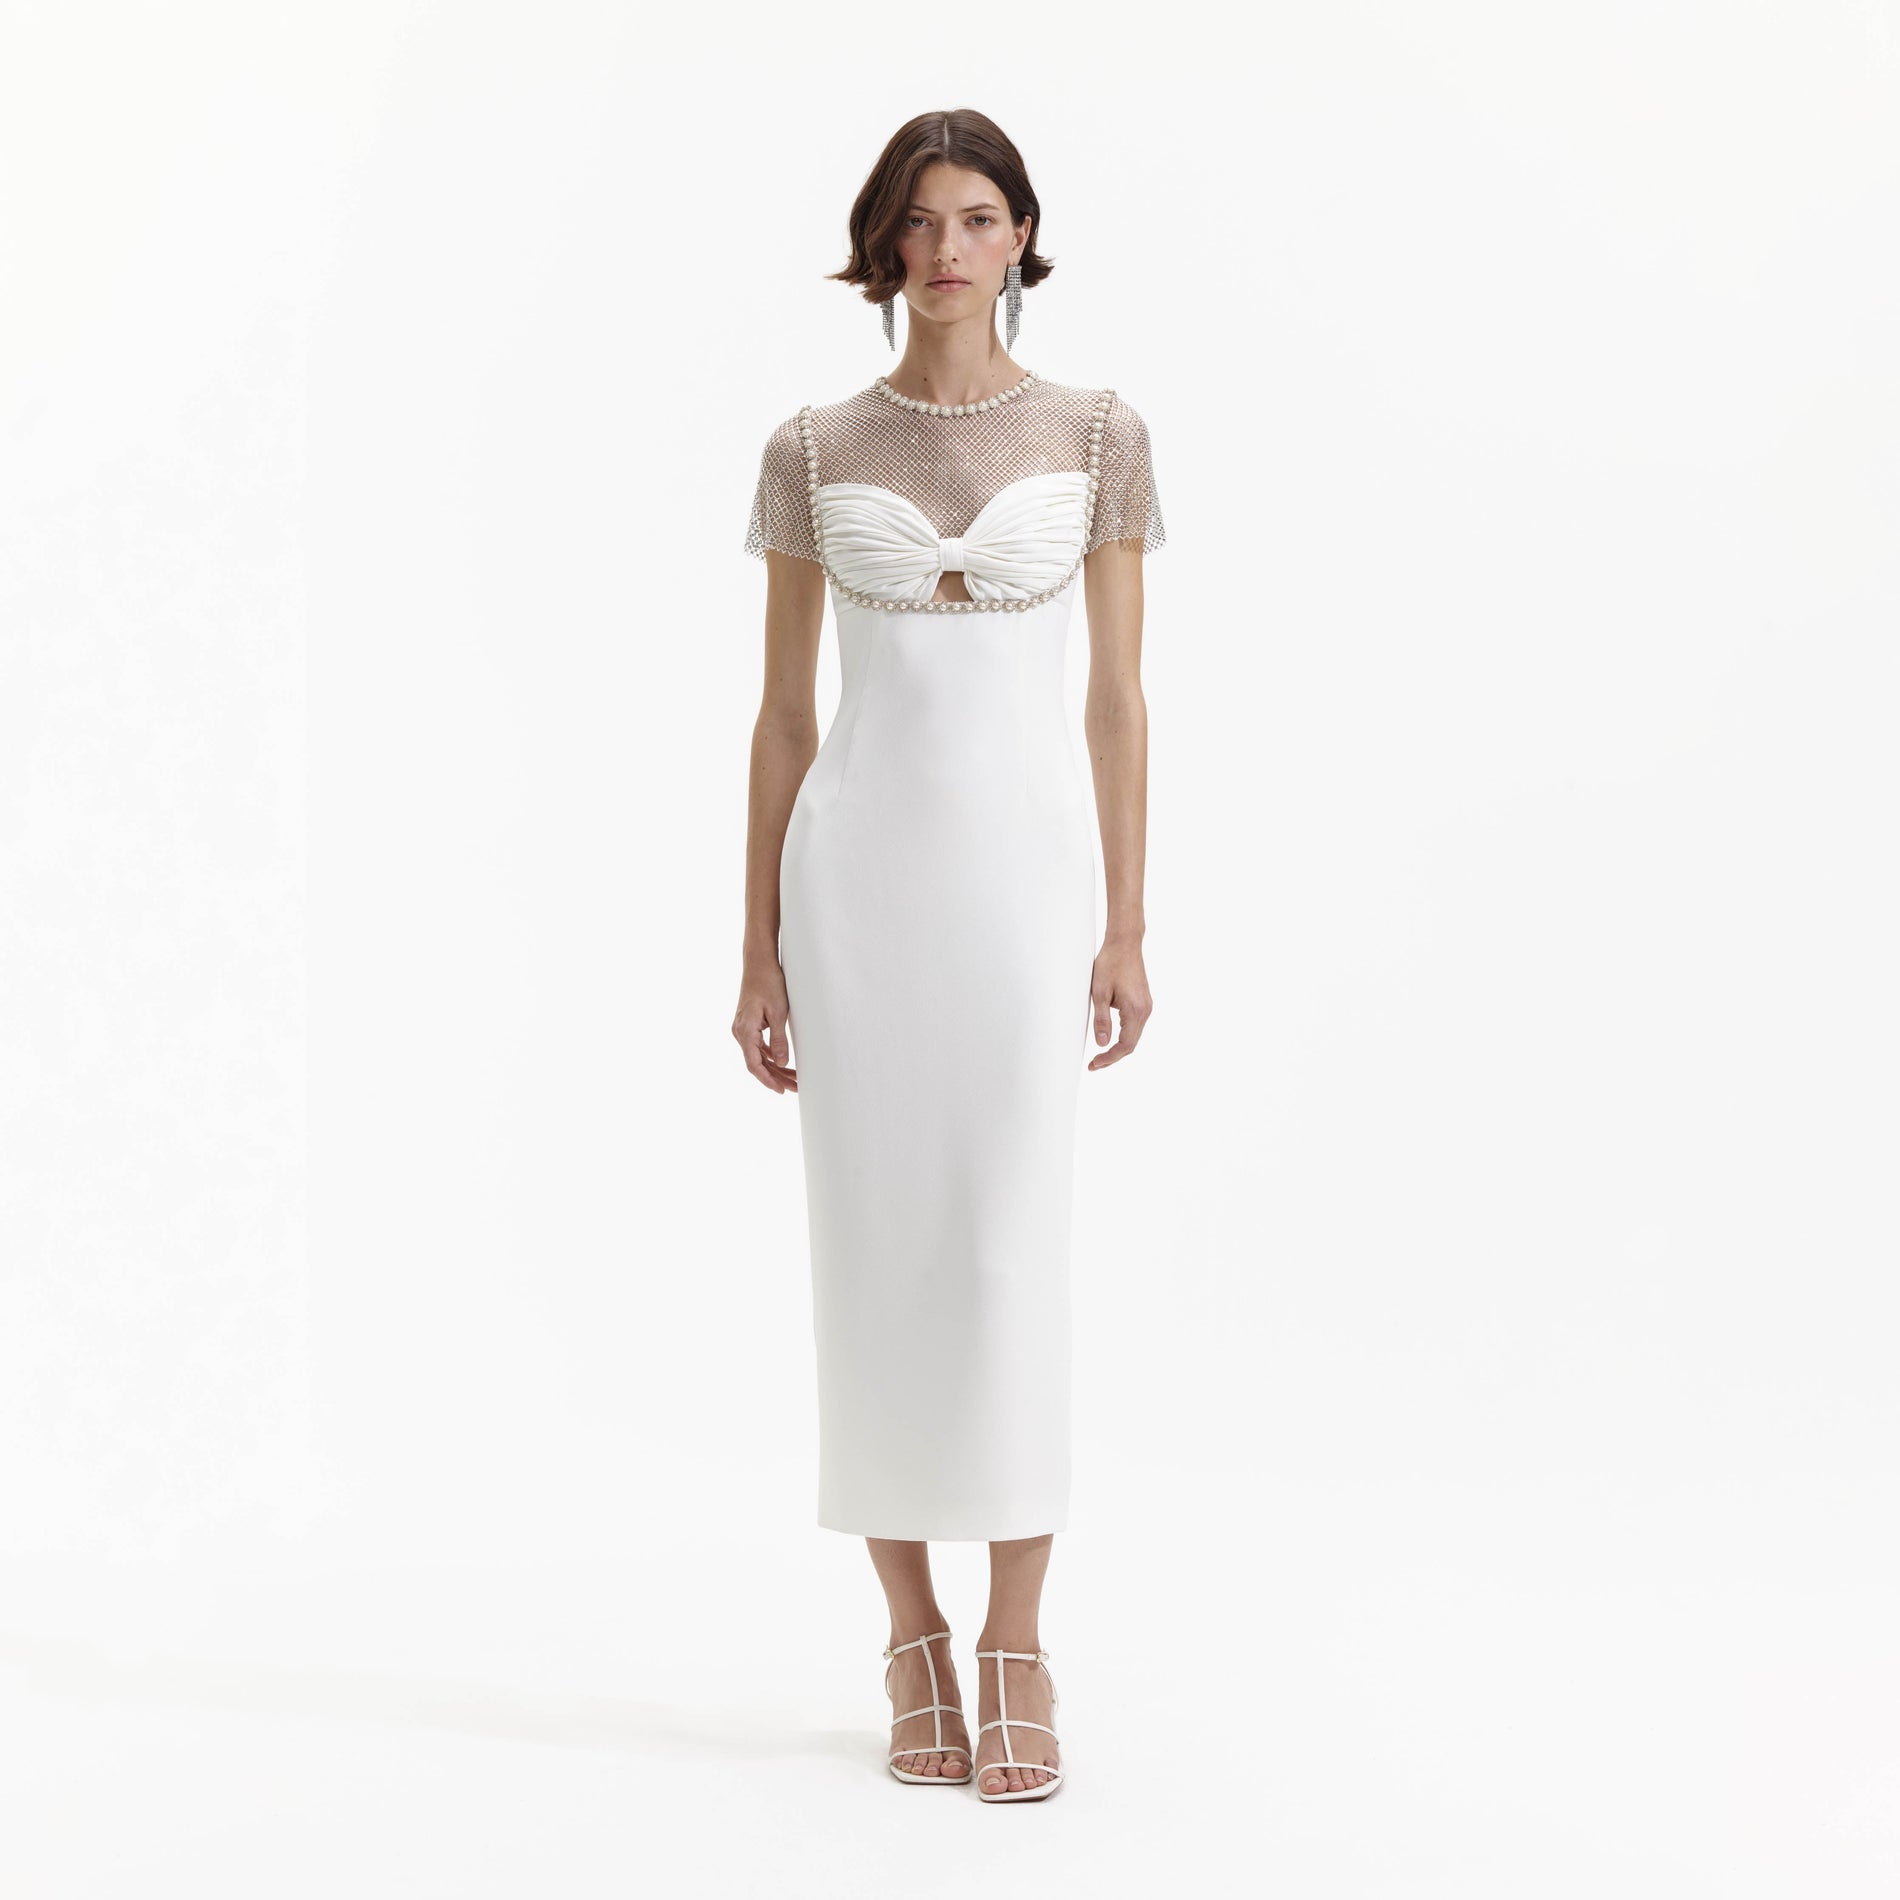 A Woman wearing the White Diamante Crepe Midi Dress